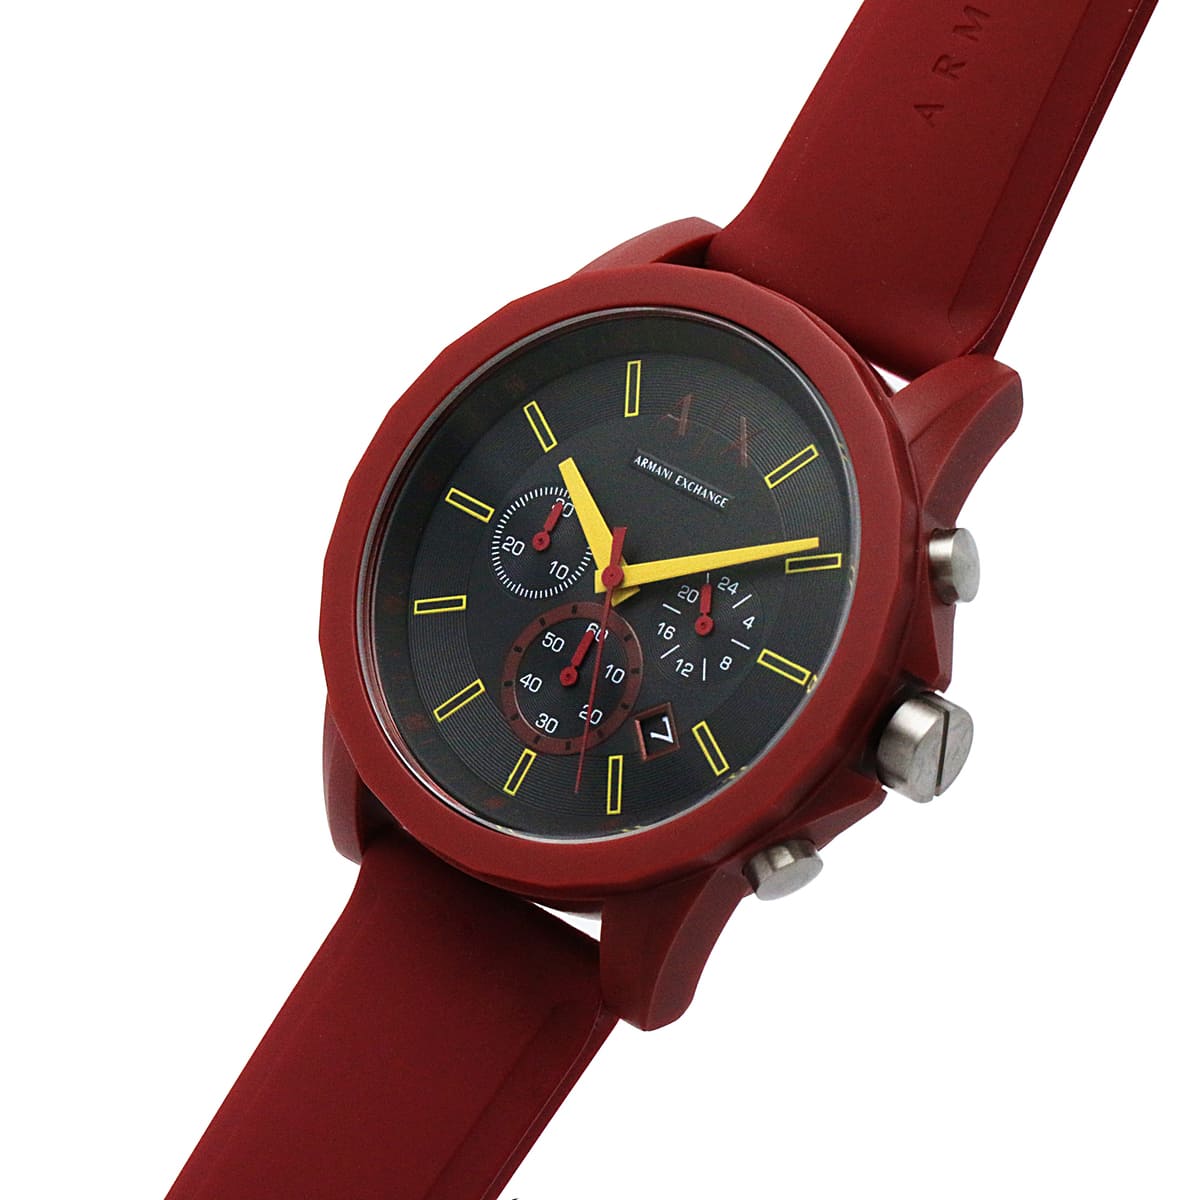 Armani Exchange Men's Watch Outerbanks AX7125 | Watches Prime